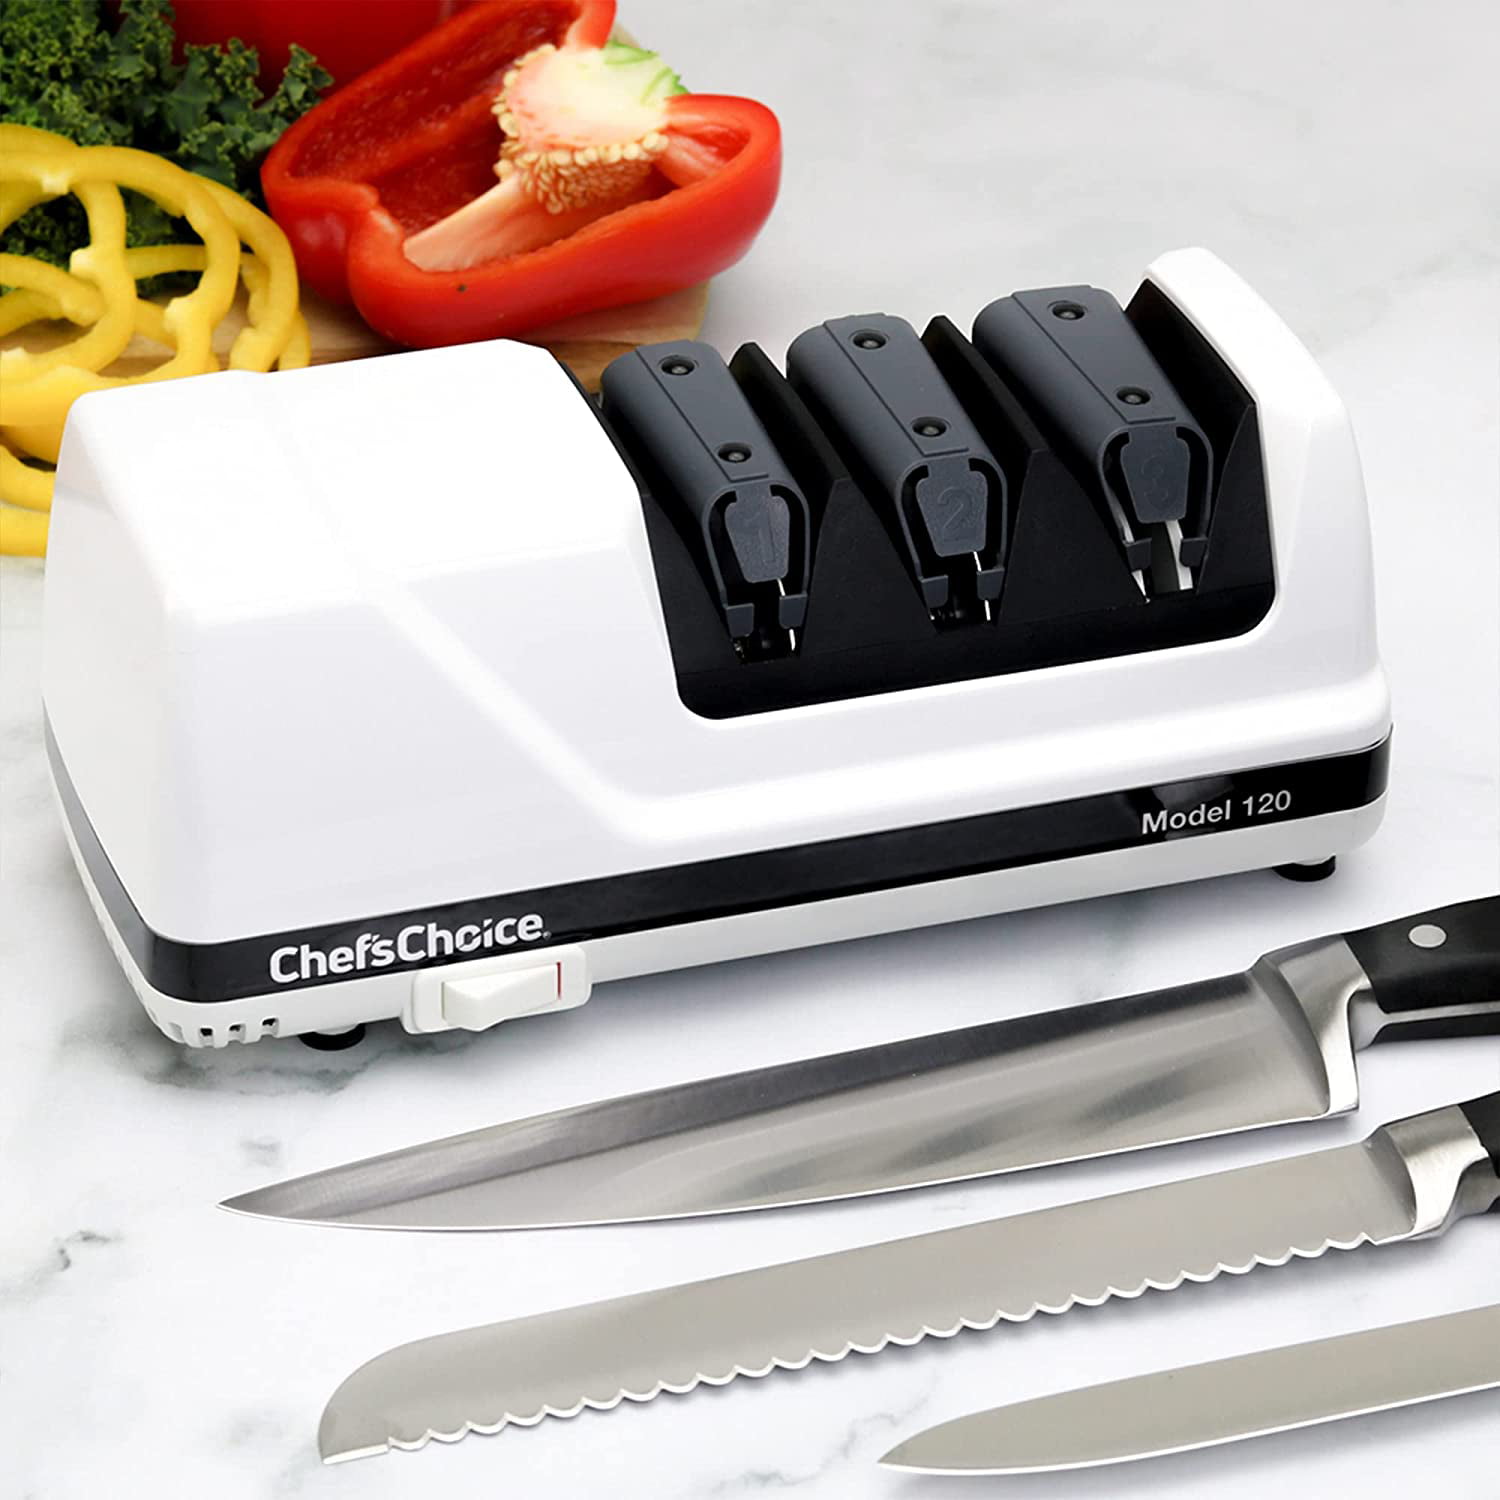 Chef'sChoice Diamond Hone Knife Sharpener — Fishing • Hunting • Serrated —  Model 4635